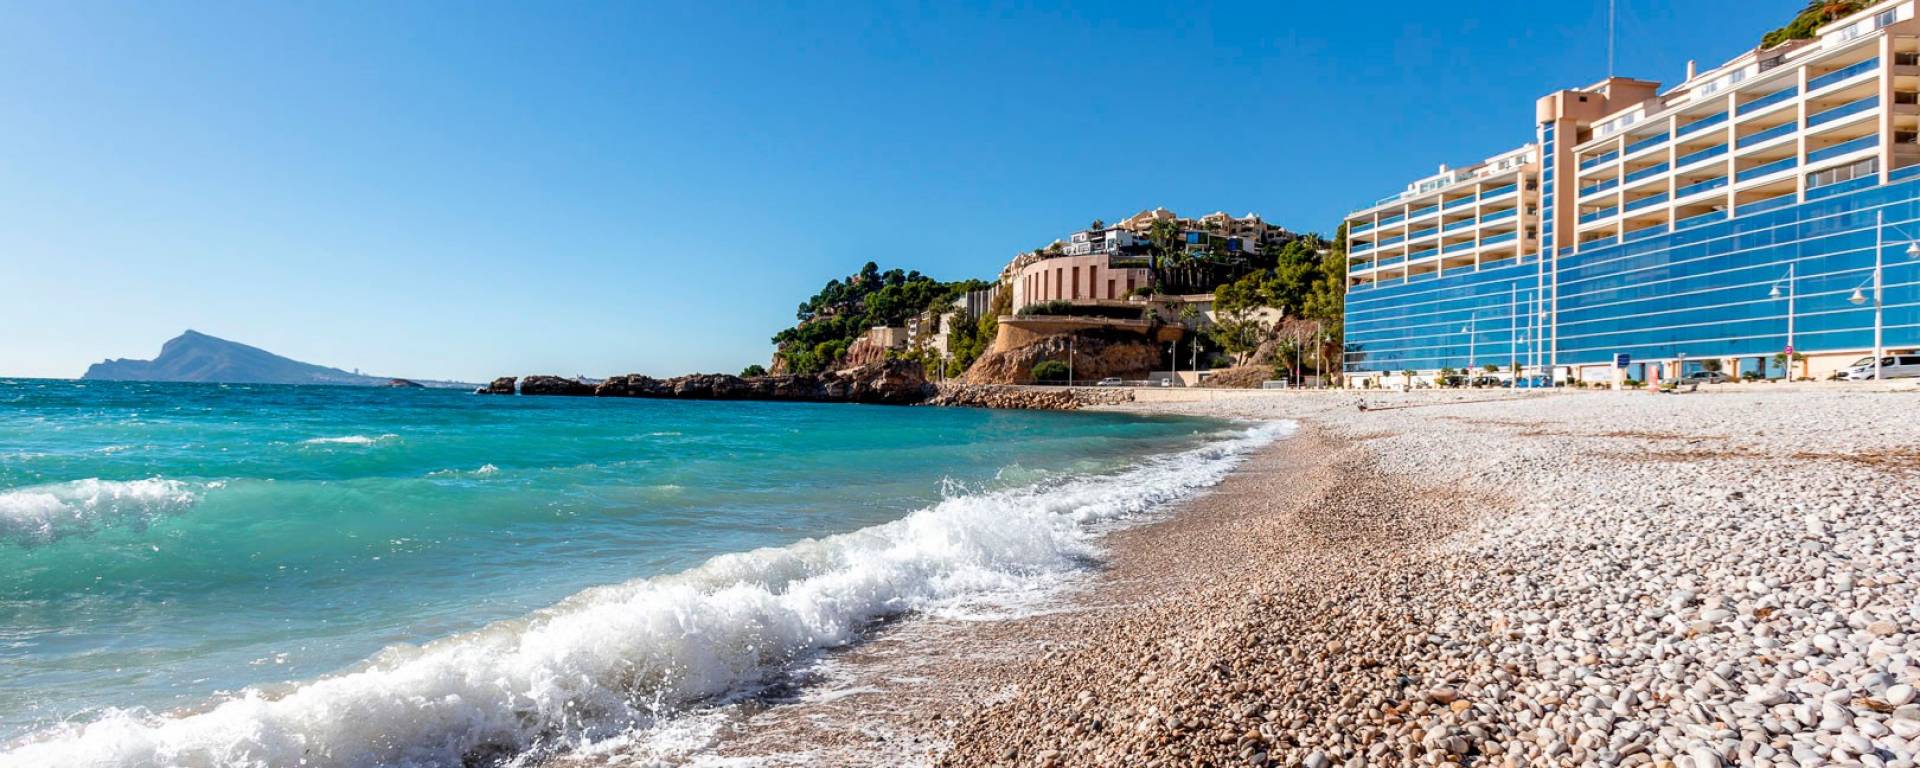 Beachfront Property for sale in Alicante Spain